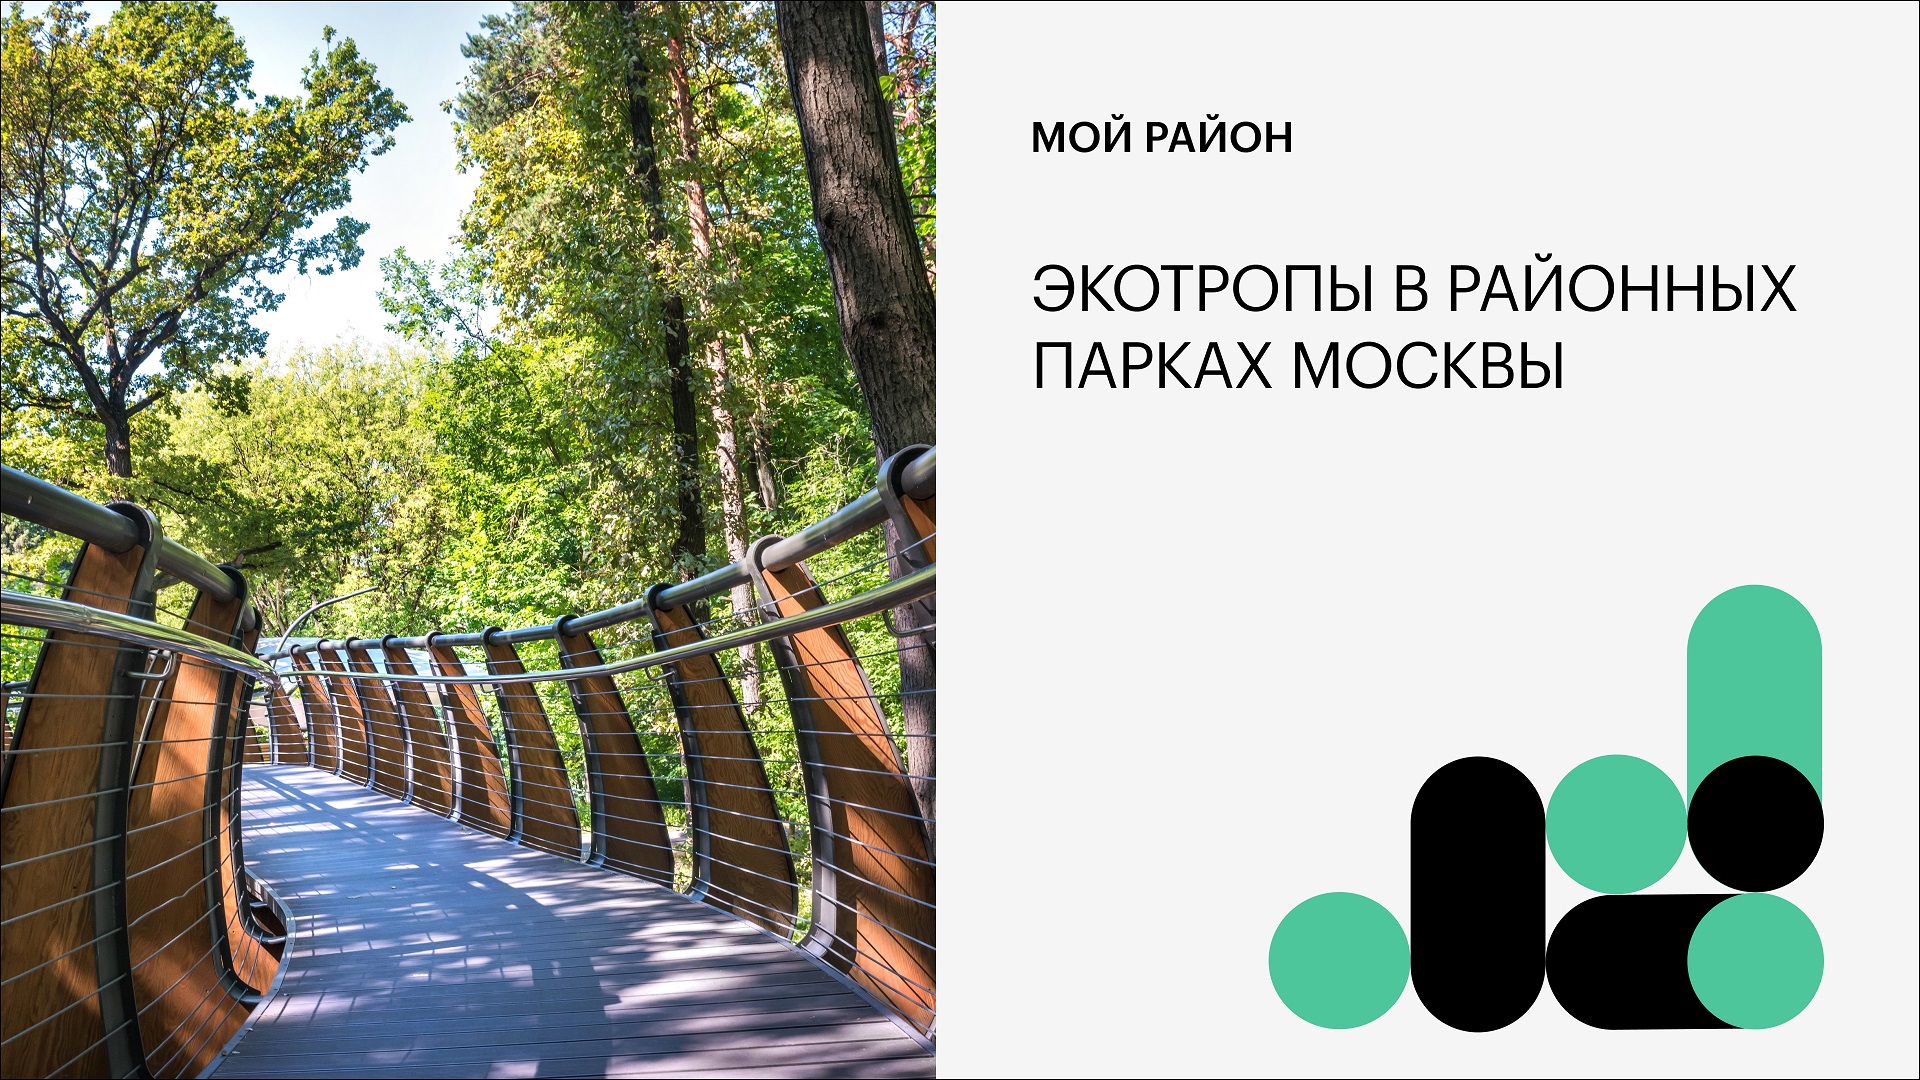 Экотропы в районных парках Москвы